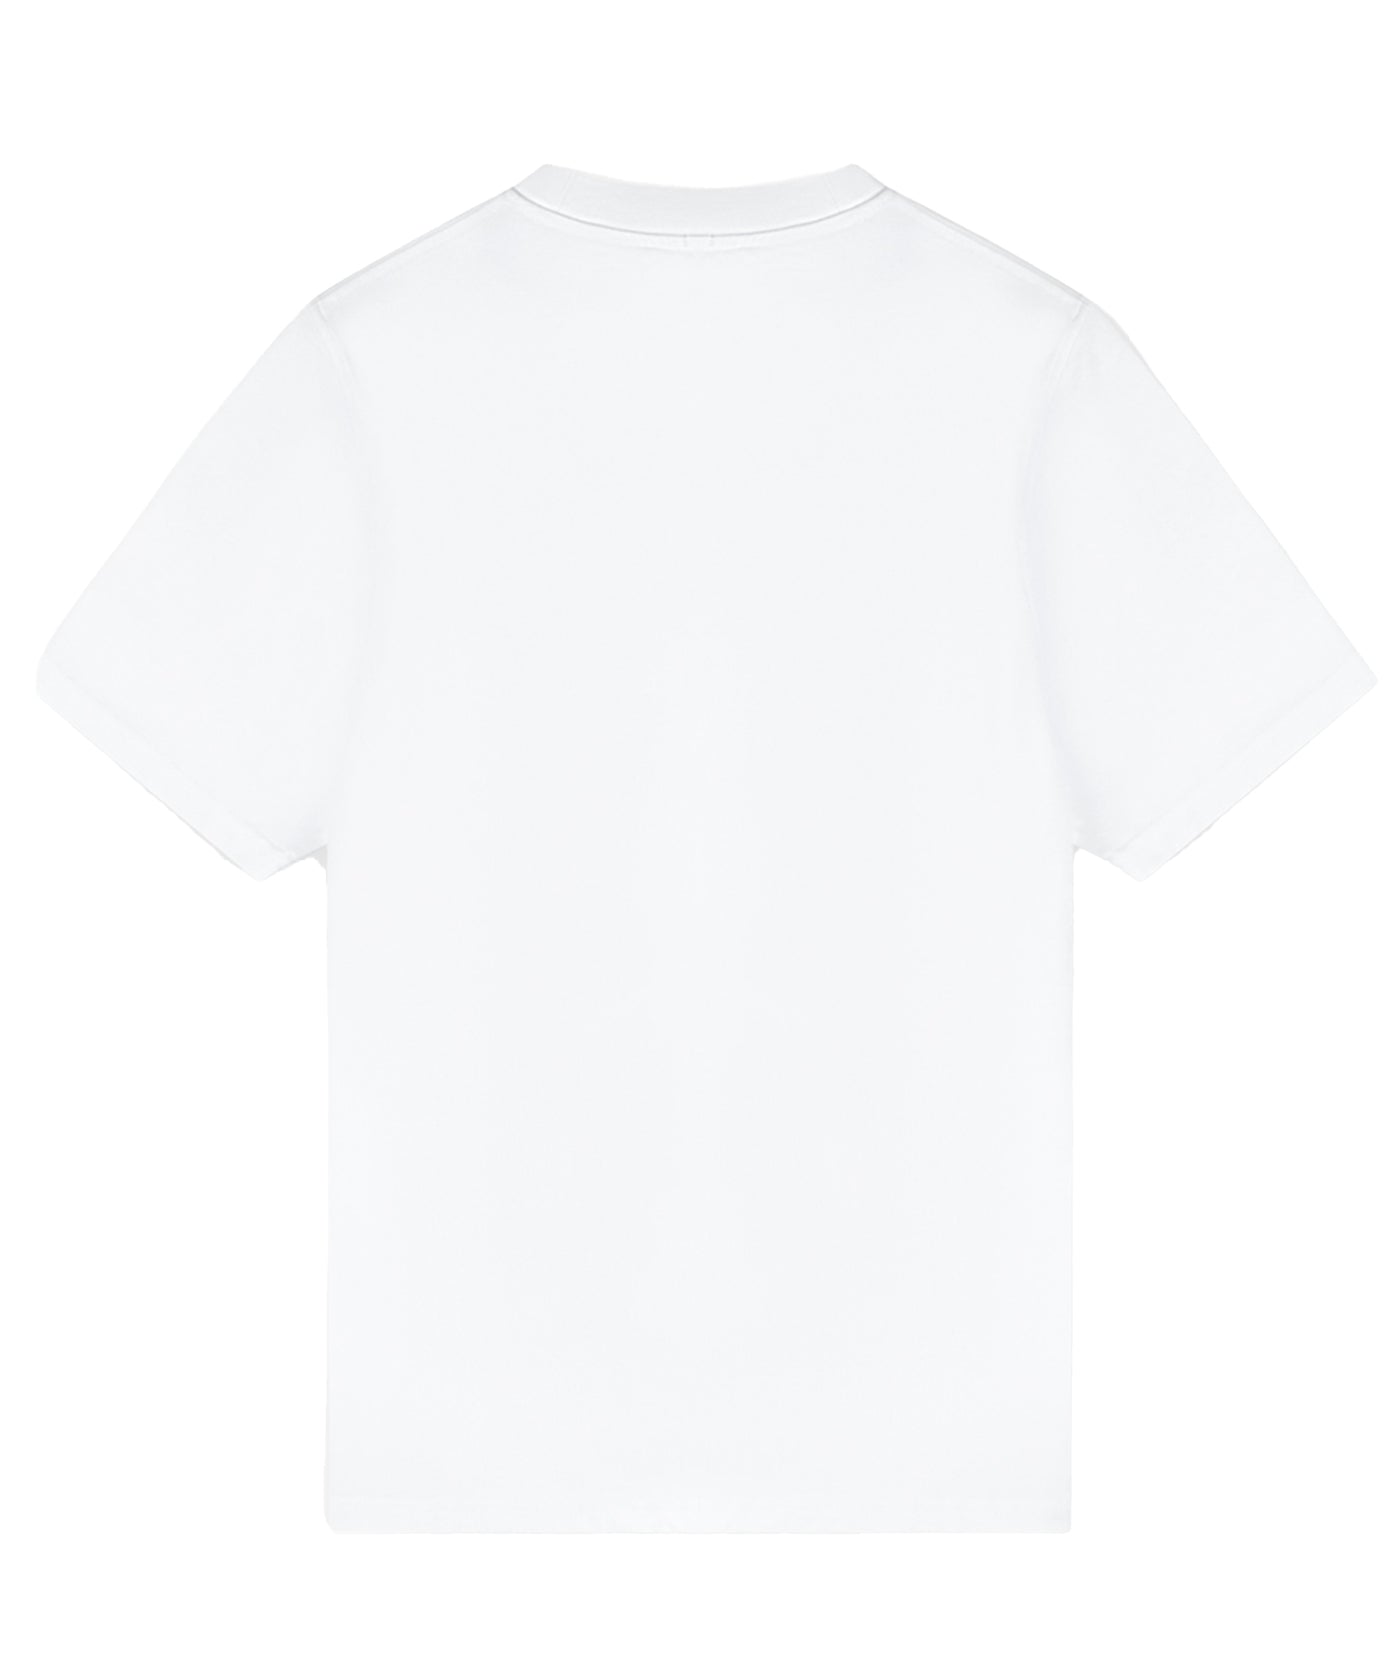 CROYEZ - Guess Whos Back - T-shirt - 973 White/vintage Grey